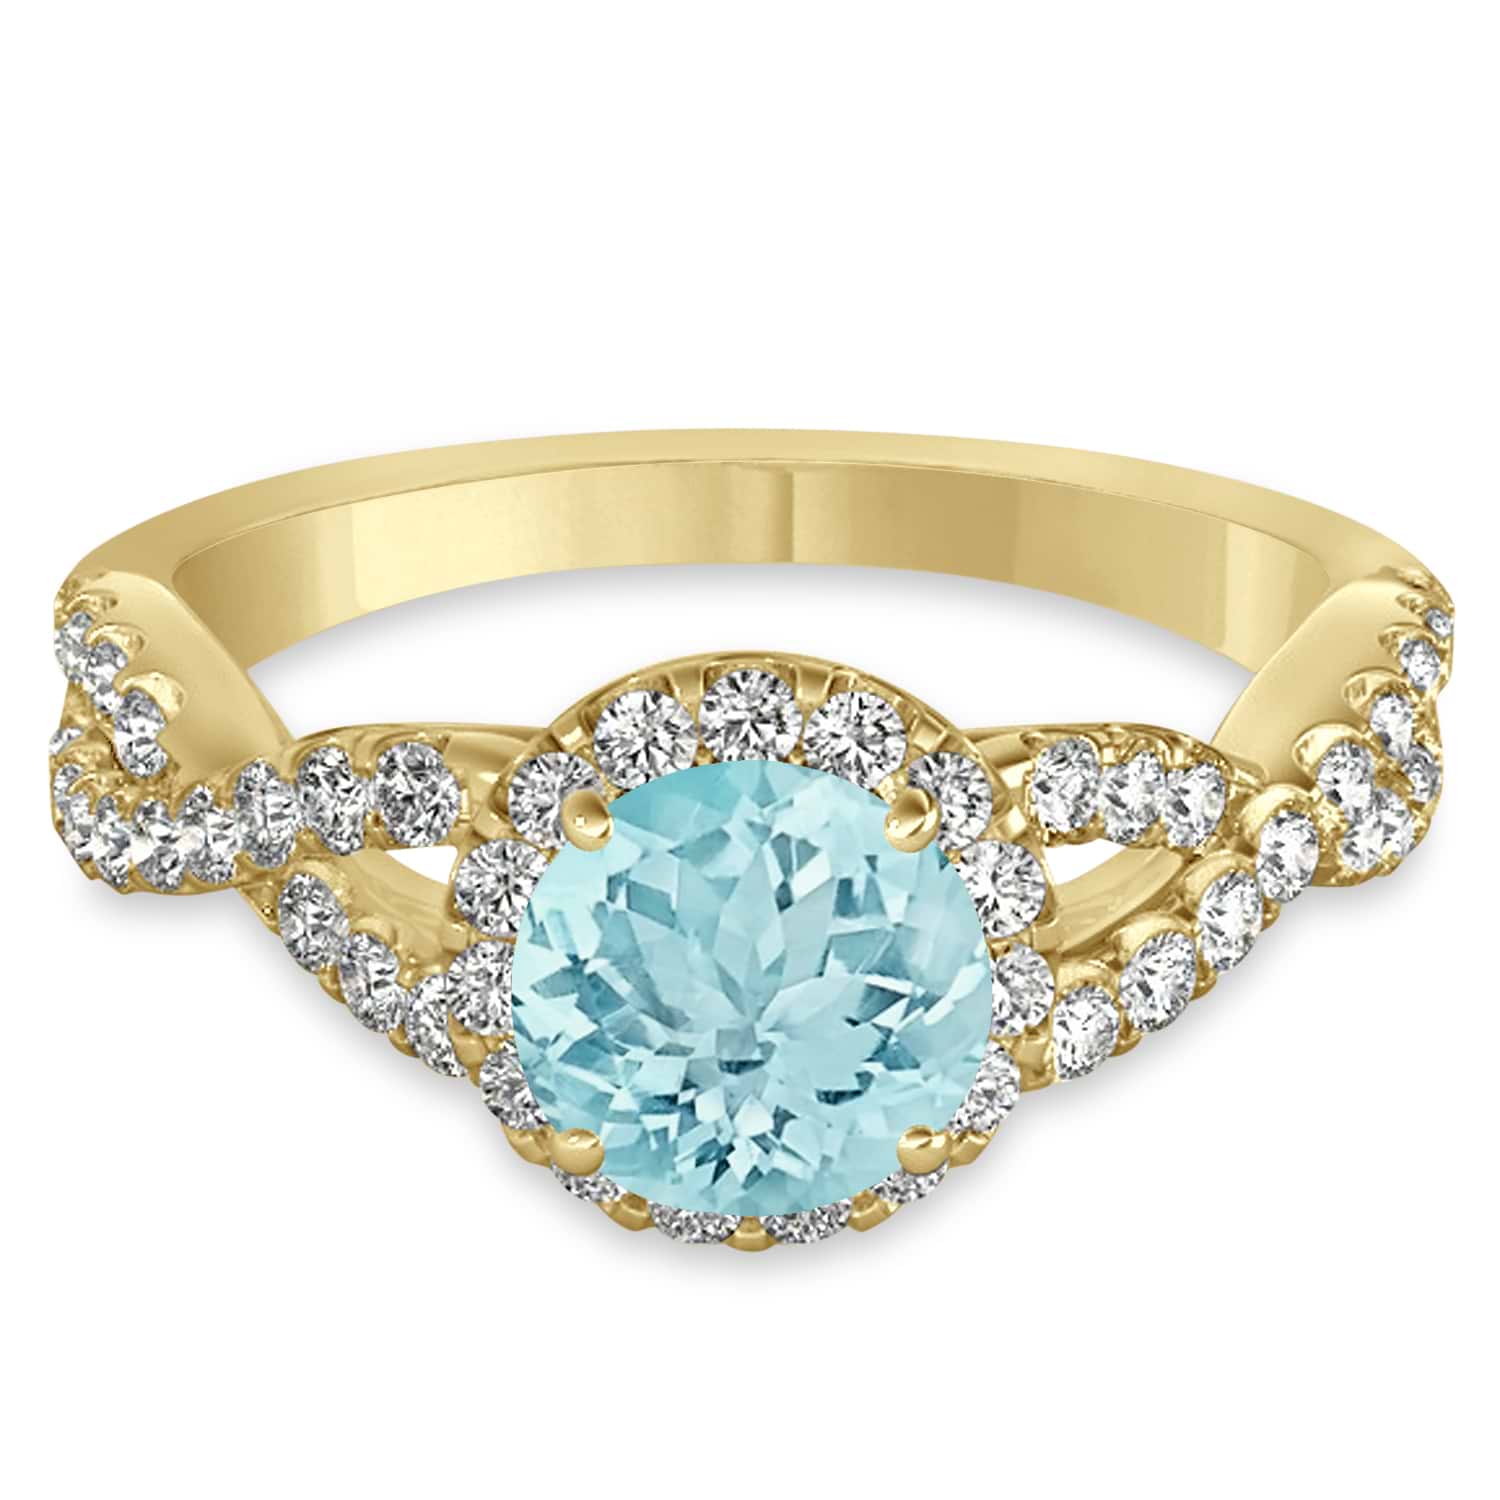 Aquamarine & Diamond Twisted Engagement Ring 18k Yellow Gold 1.25ct